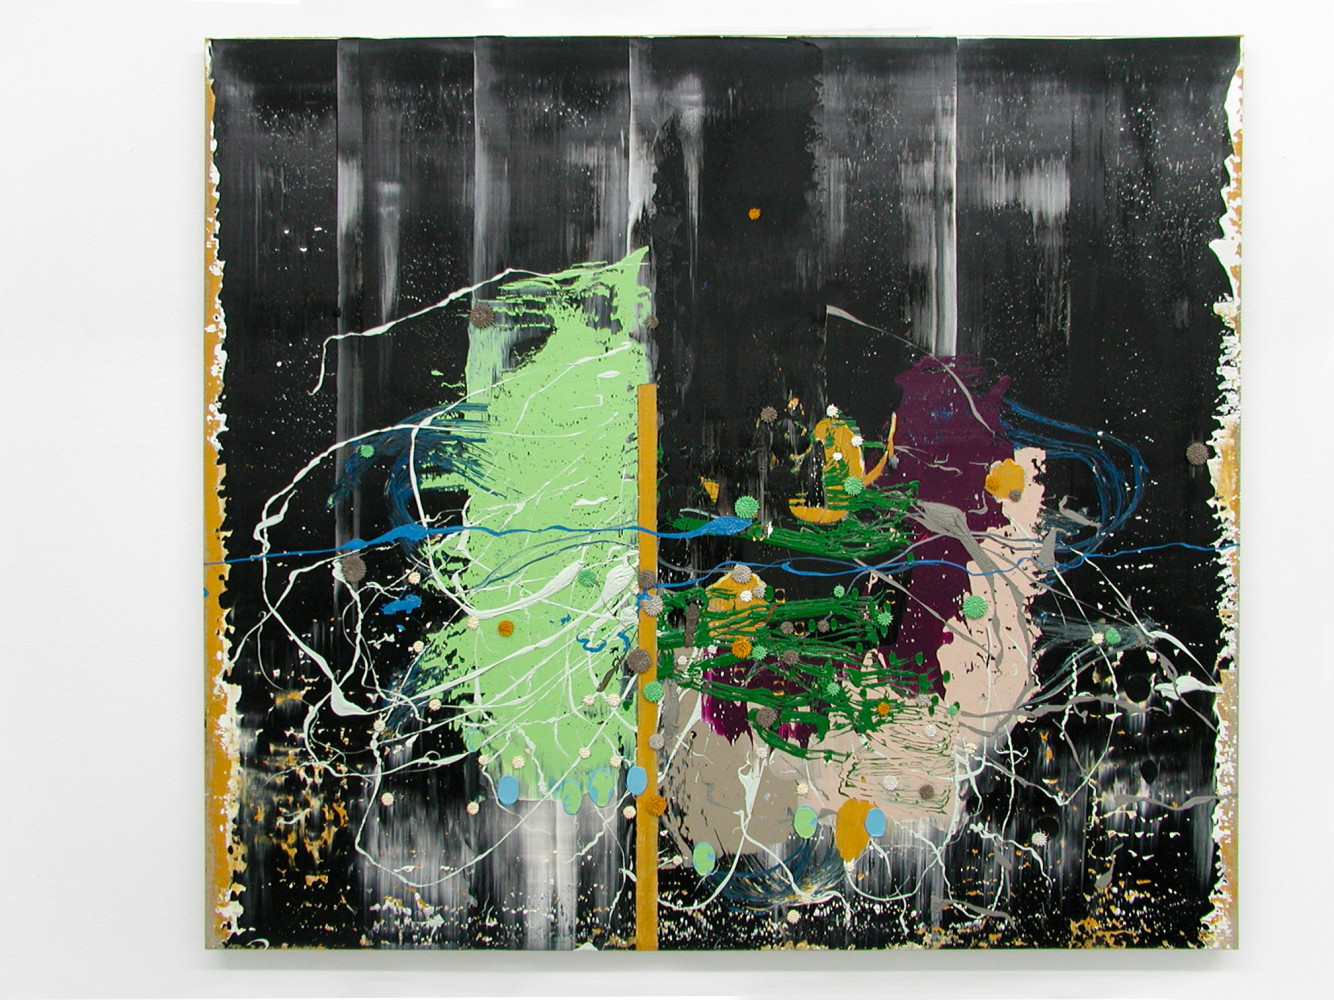 ‘Dennis Hollingsworth’, menelausii, mixed media on canvas